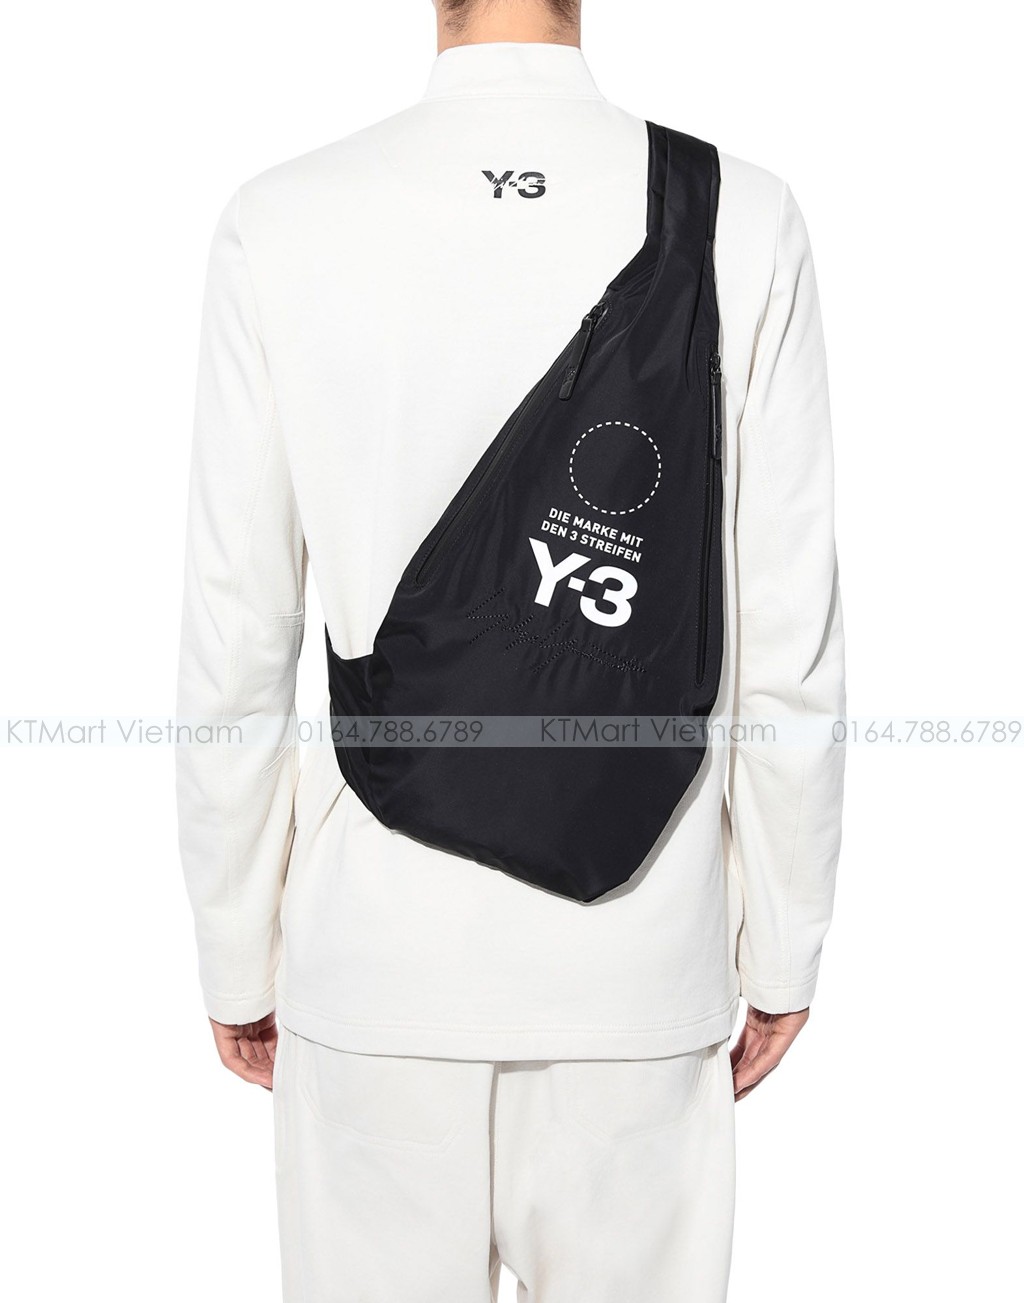 Y-3 Yohji Messenger Bag Y3 ktmart.vn 4